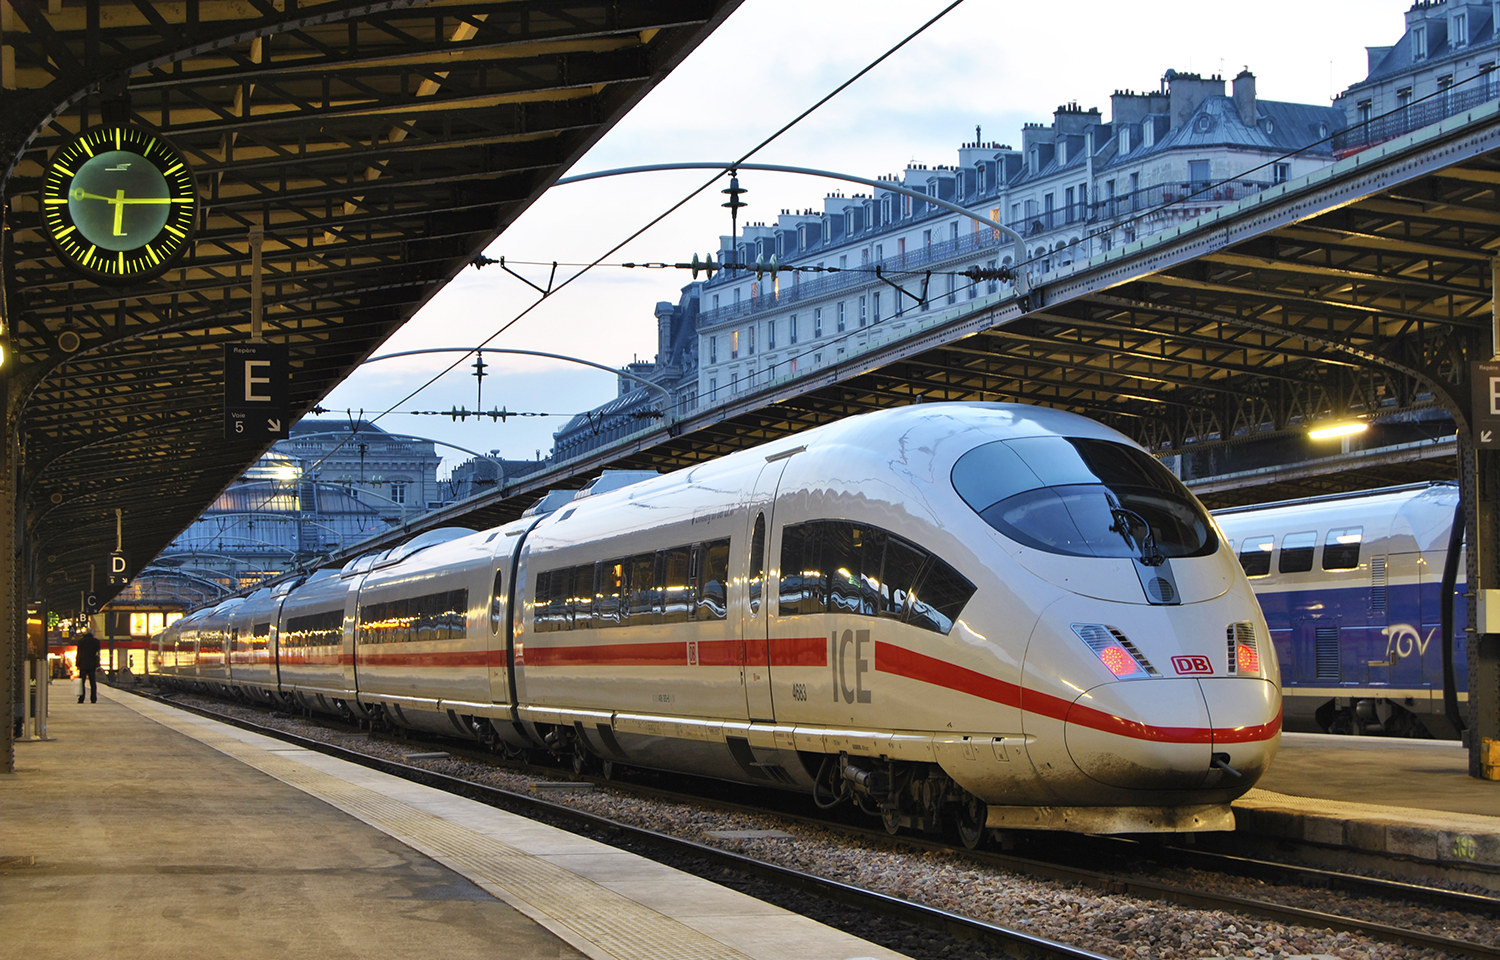 Deutsche Bahn runs cross-border rail services 